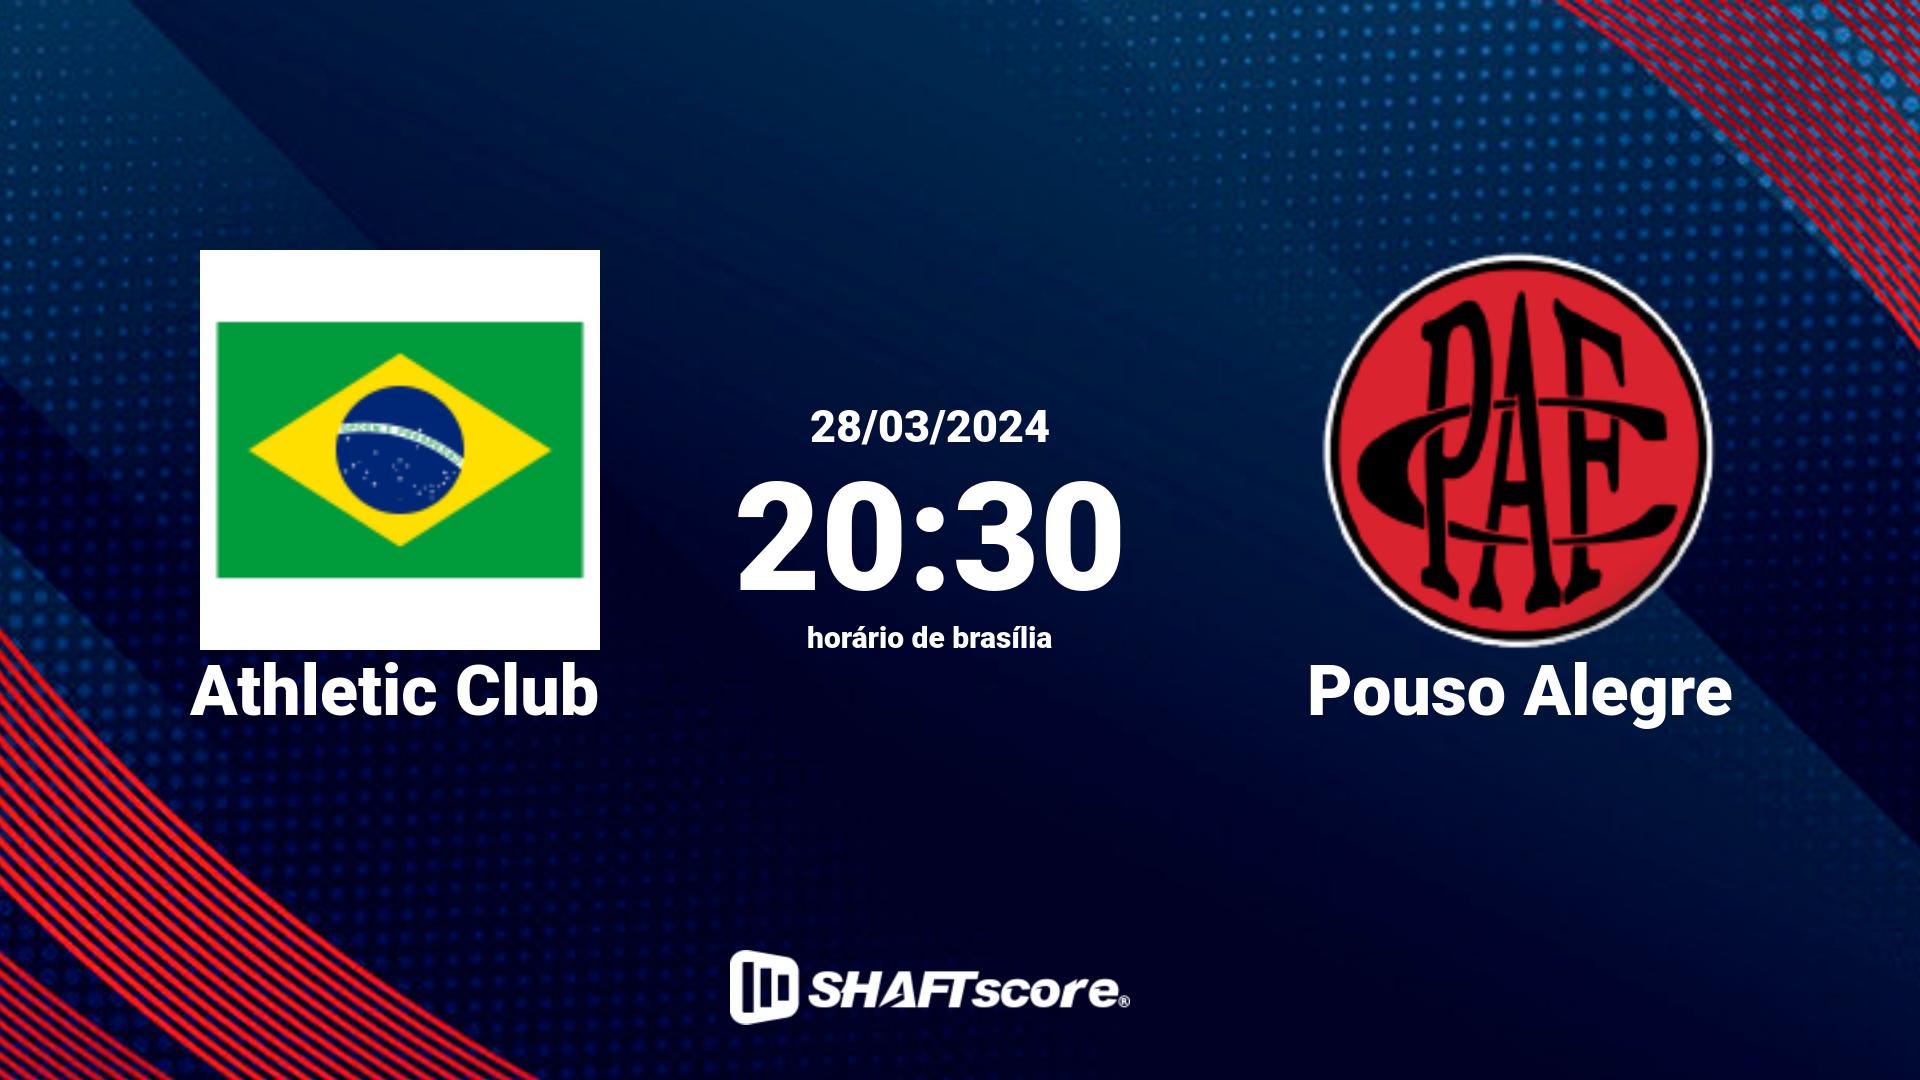 Estatísticas do jogo Athletic Club vs Pouso Alegre 28.03 20:30